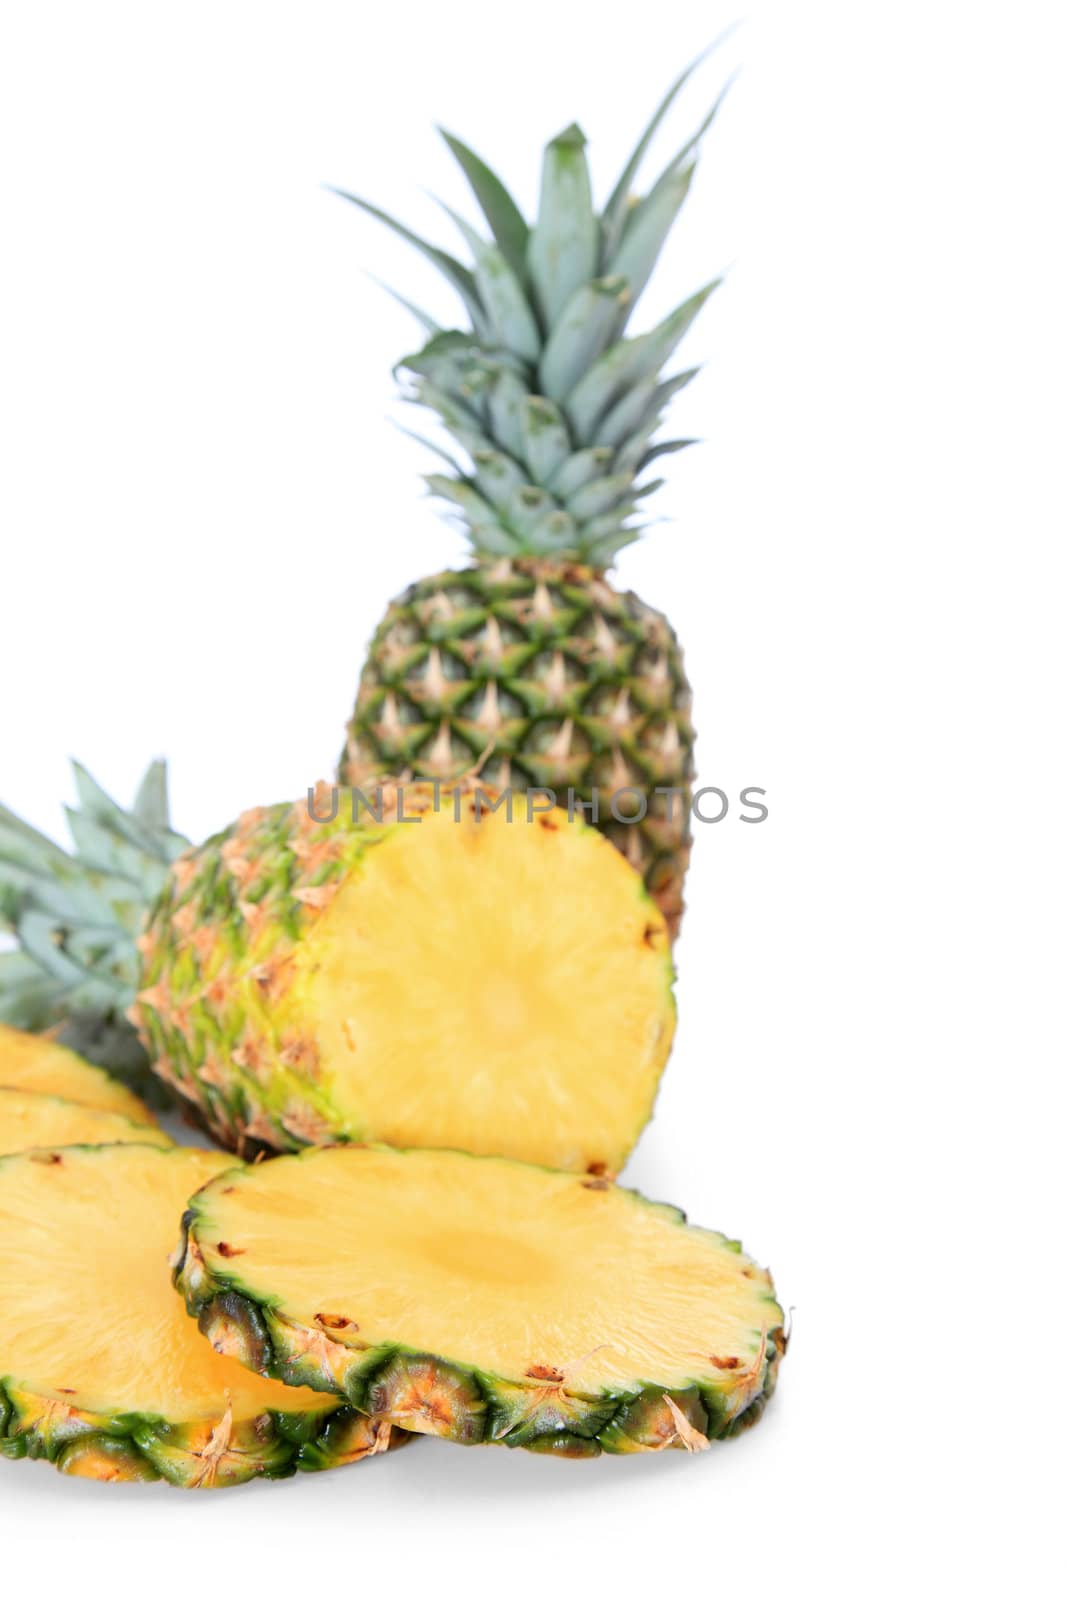 Sliced pineapples on white background.